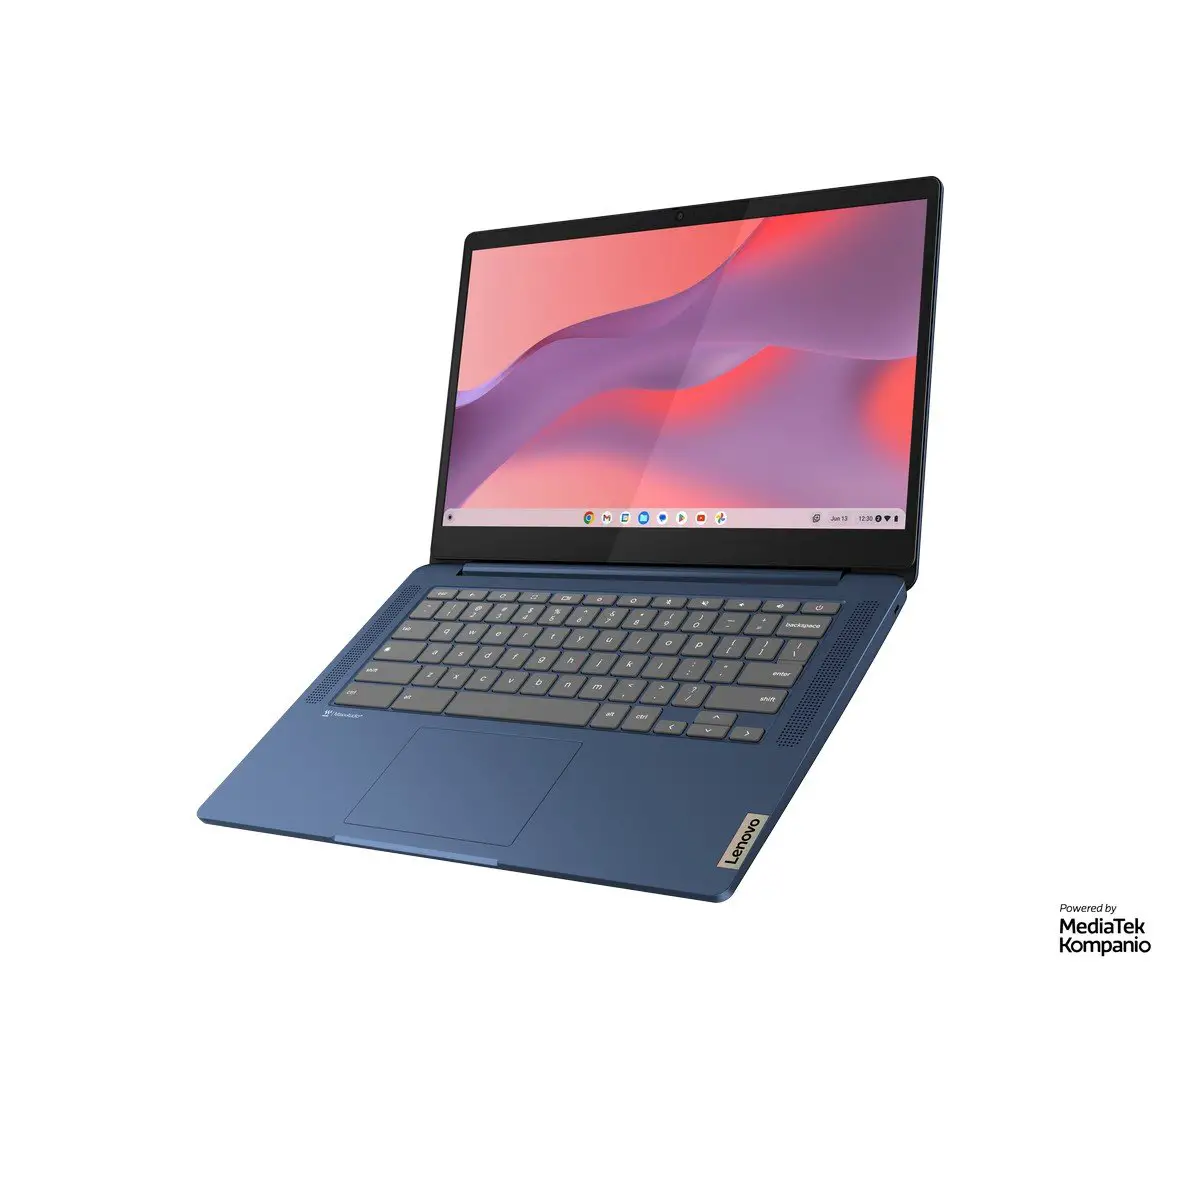 Lenovo's IdeaPad Slim 3 Chromebook boasts an amazing battery duration